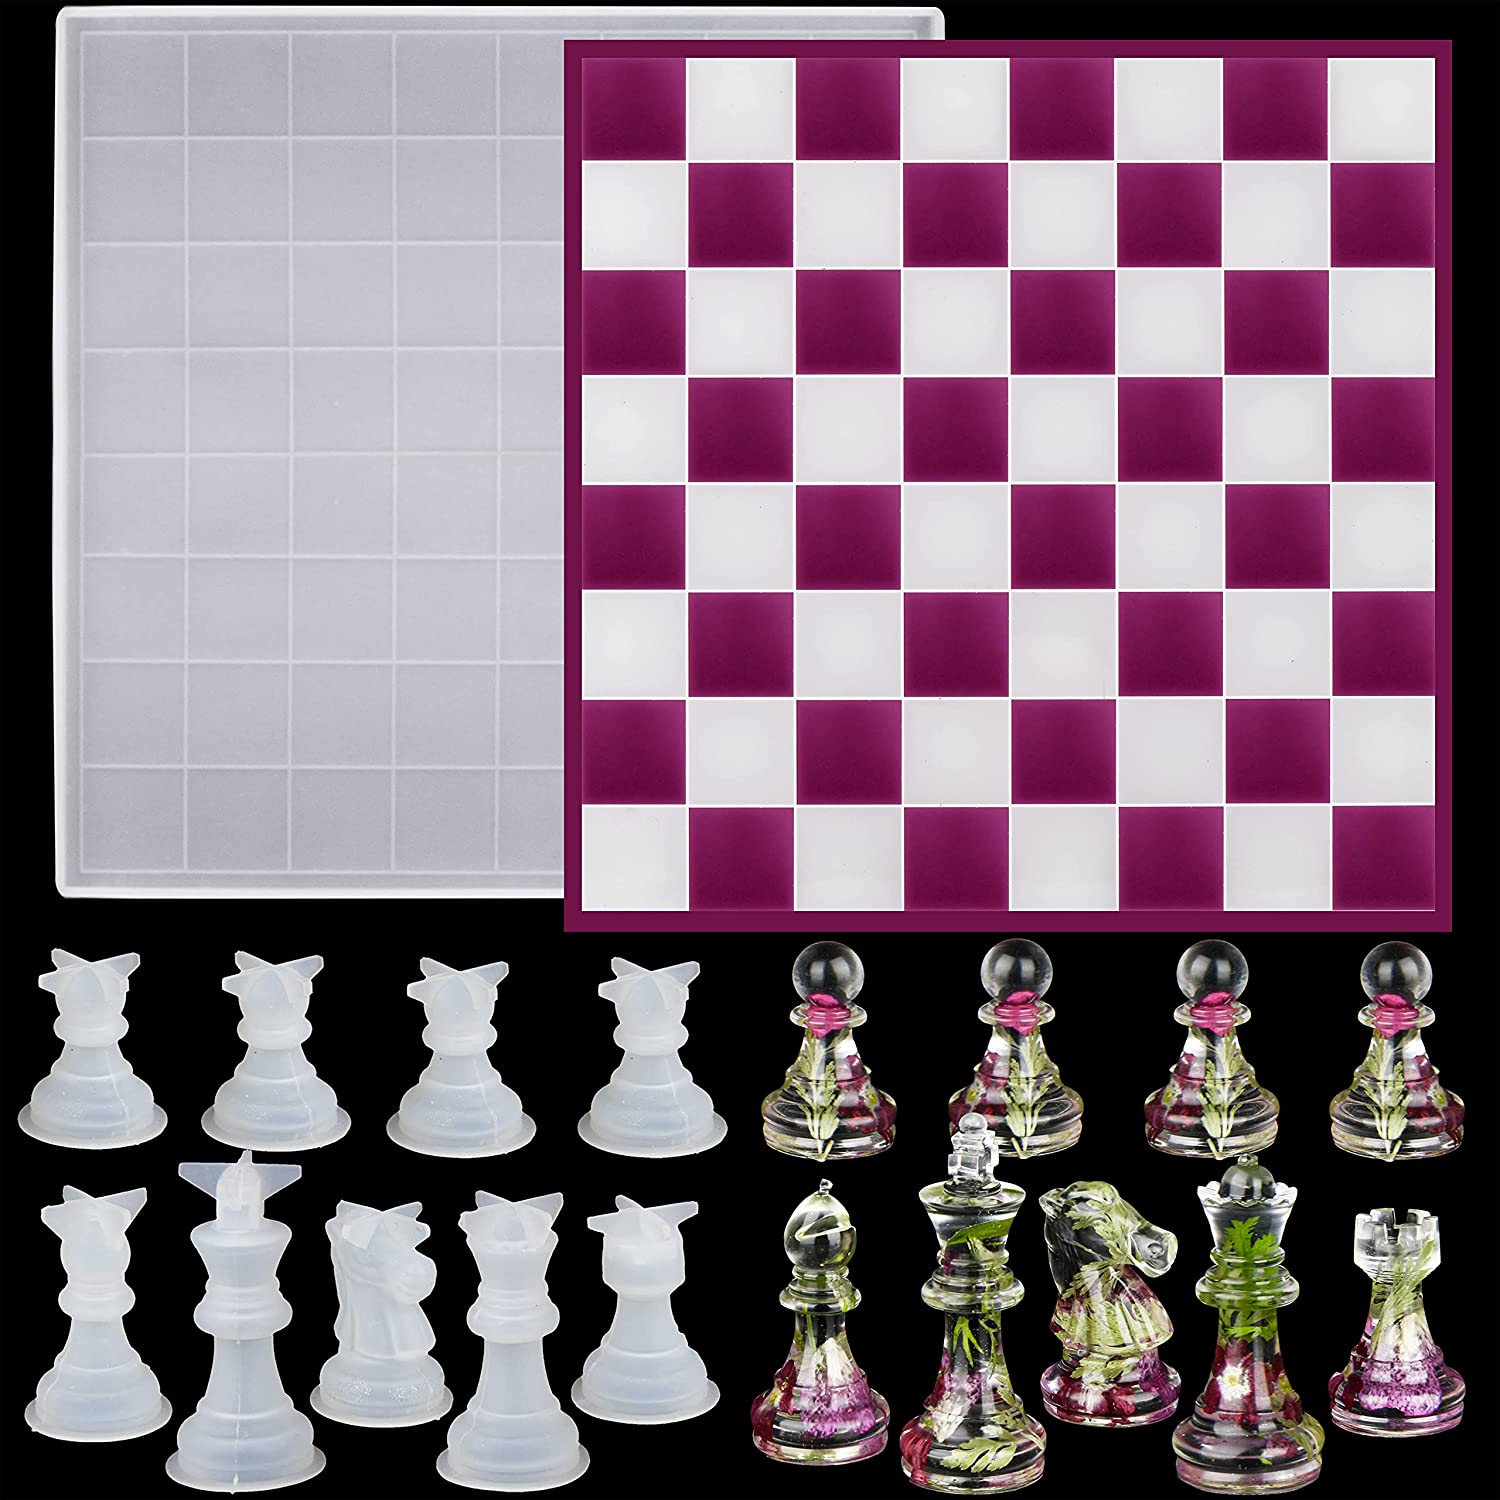 Chess Molds Set – Let's Resin